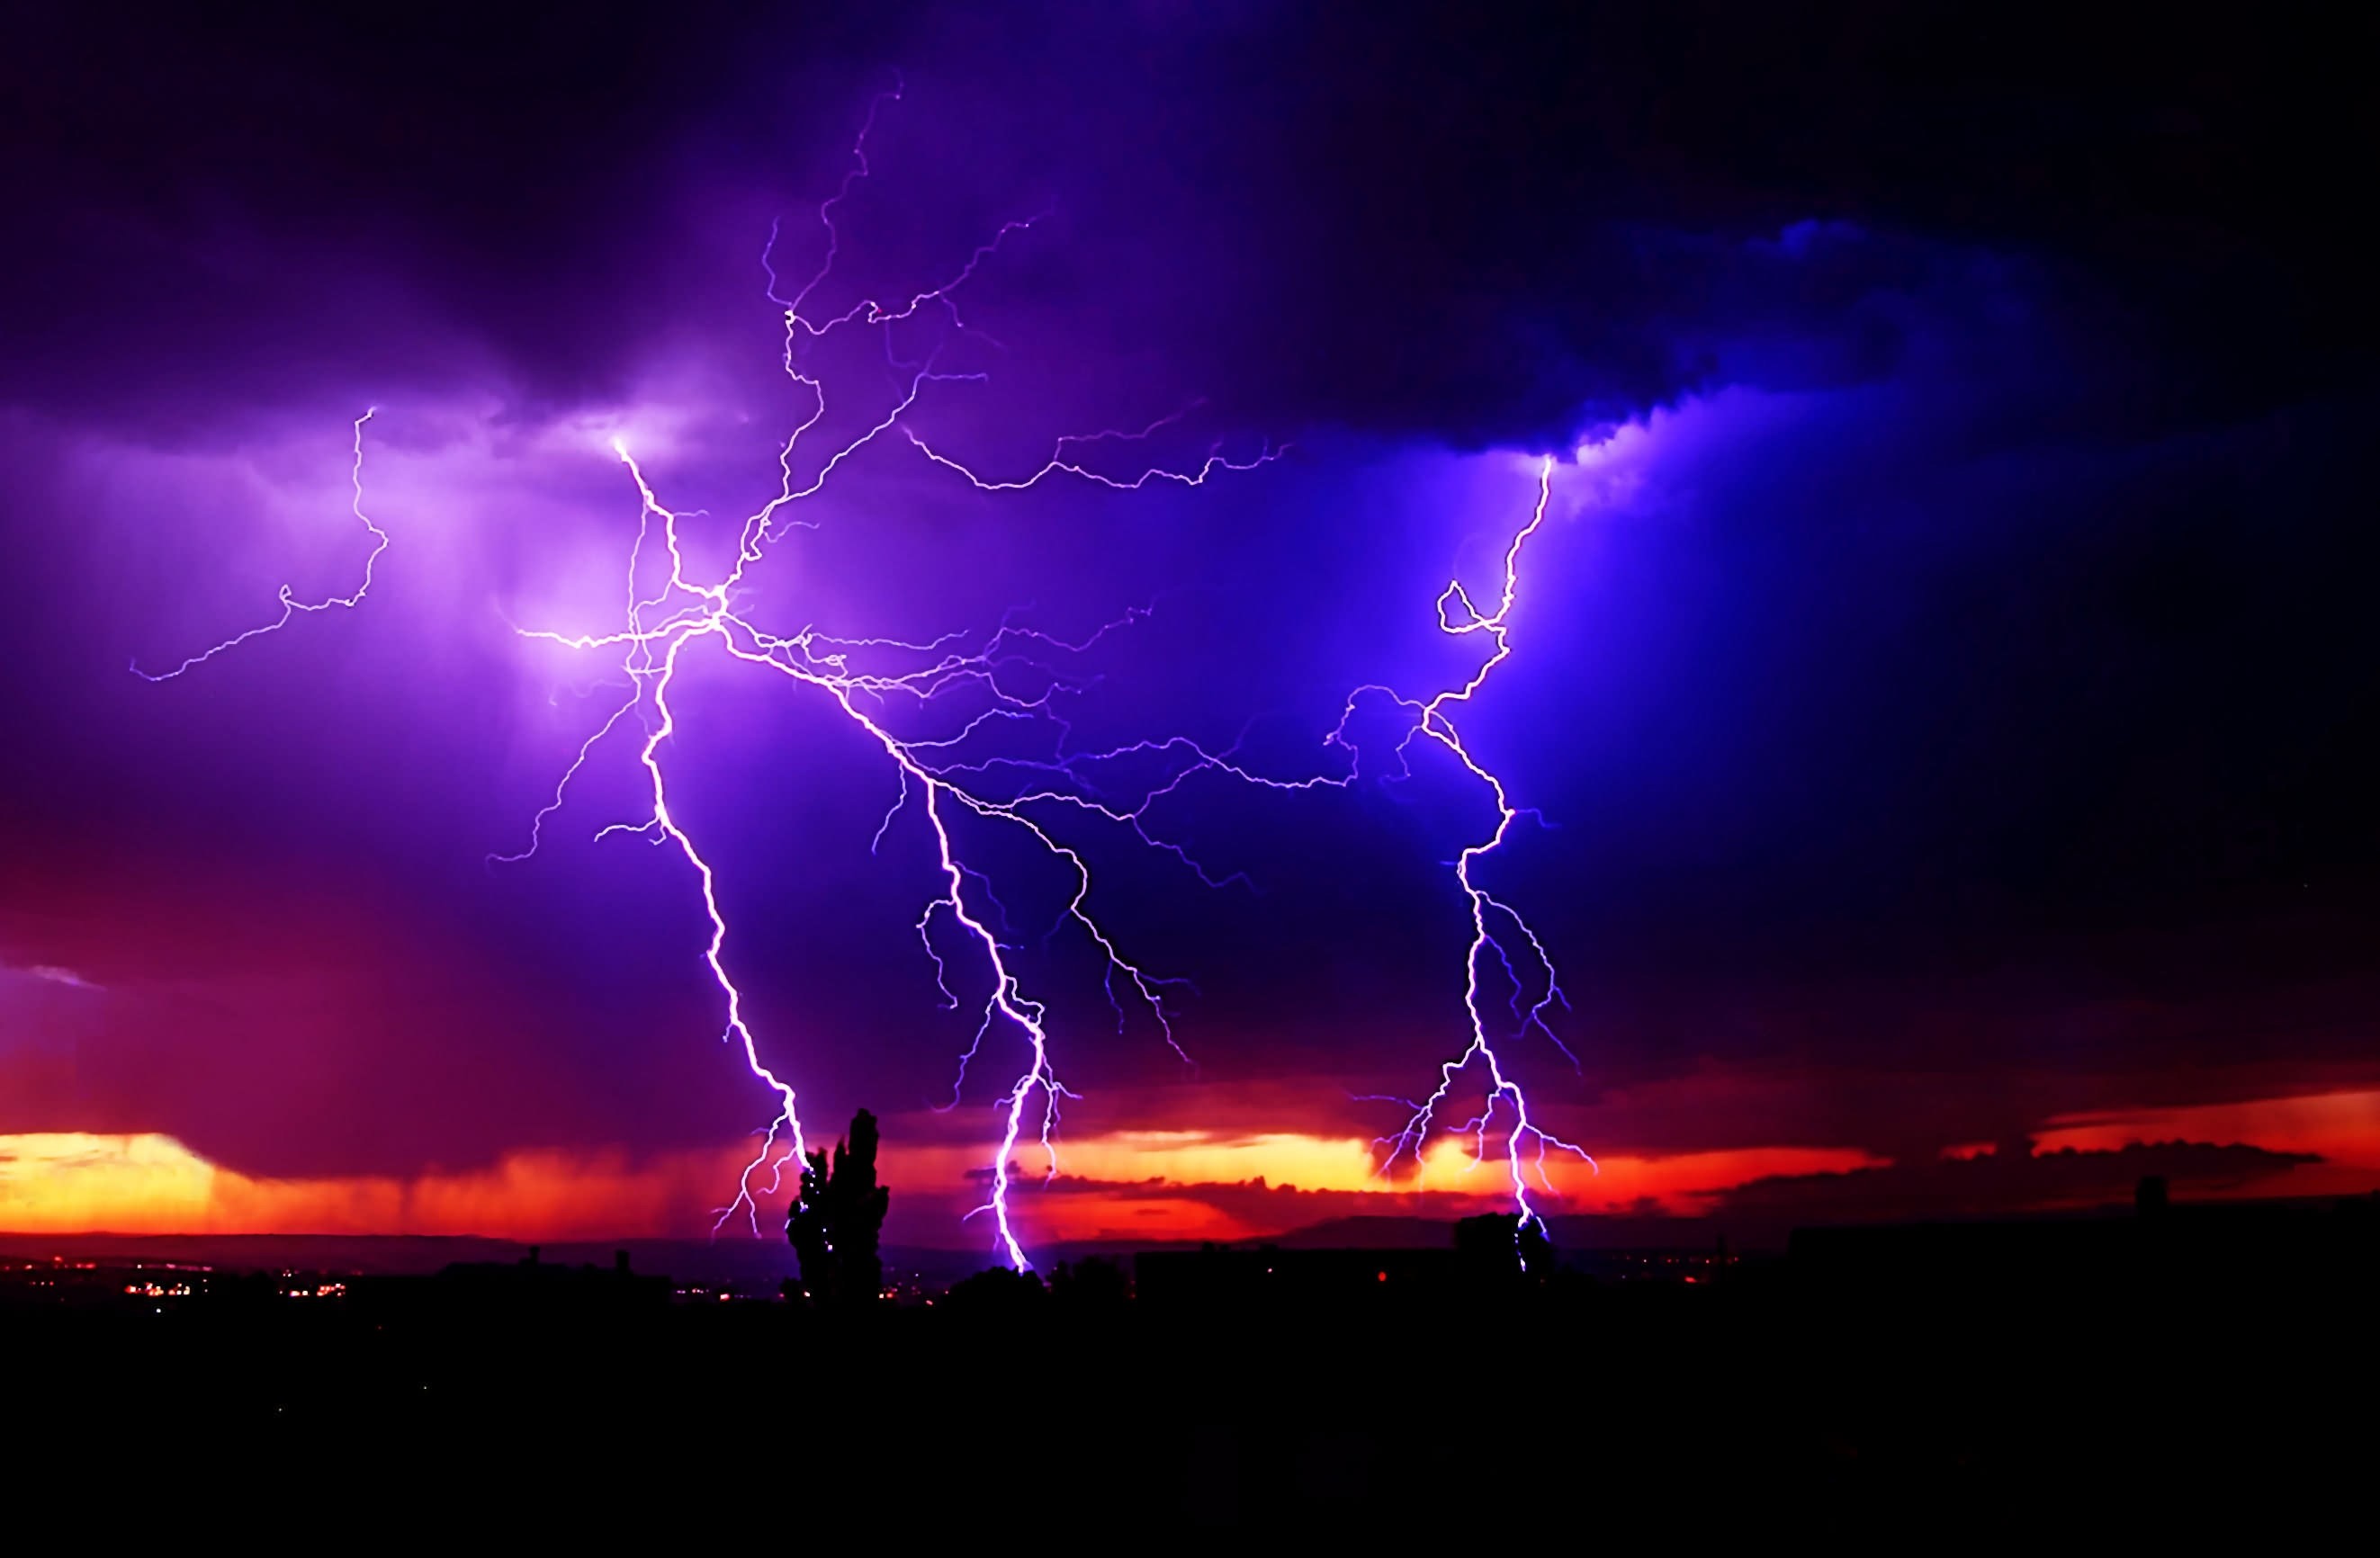 2645x1732 lightning strikes | Lightning Strike | Download HD Wallpapers | Lightning  in the sky | Pinterest | Lightning strikes and Lightning